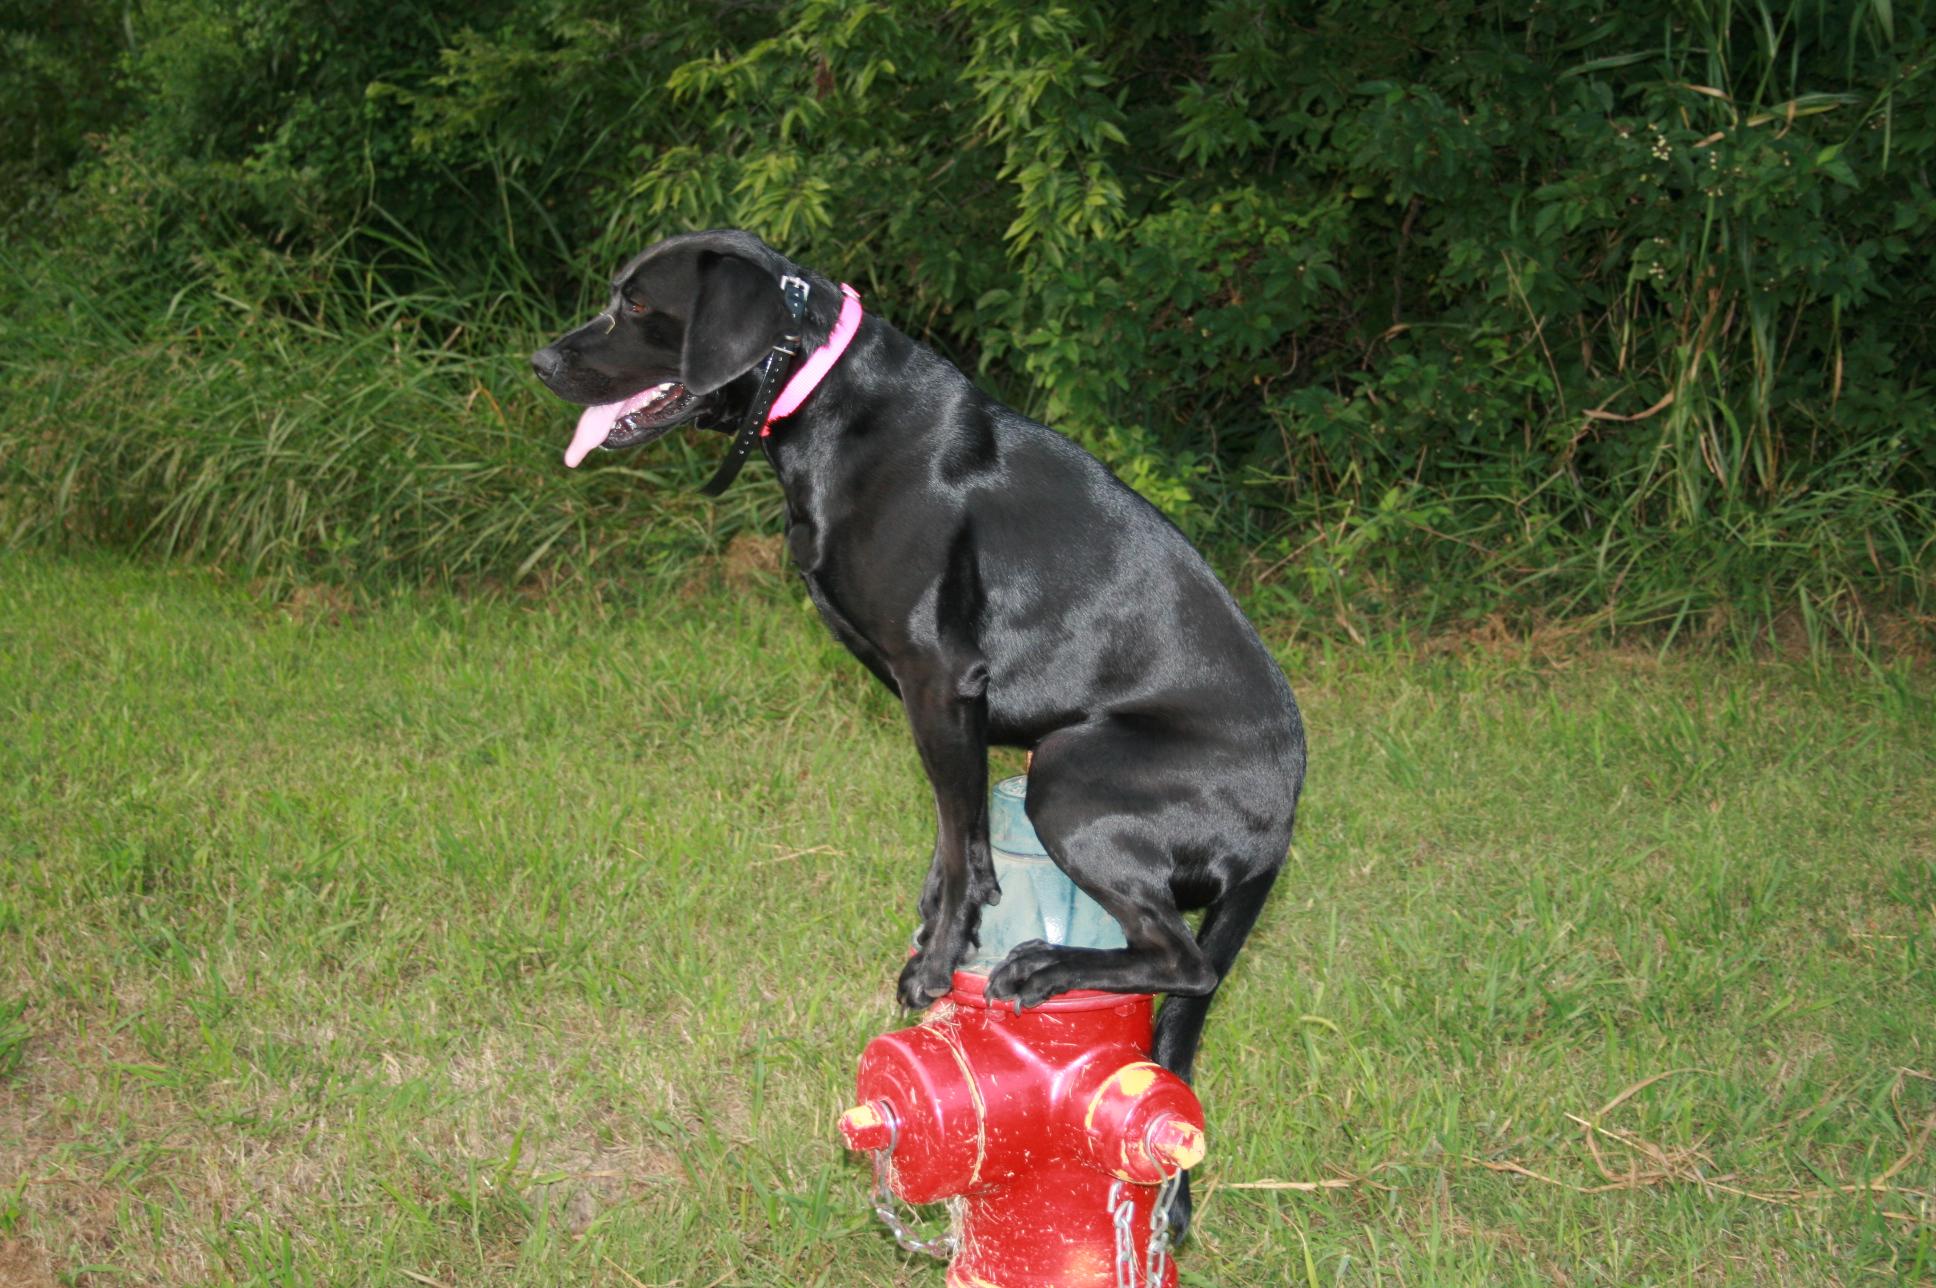 Pet Friendly Off-Leash K9 Indianapolis Dog Training